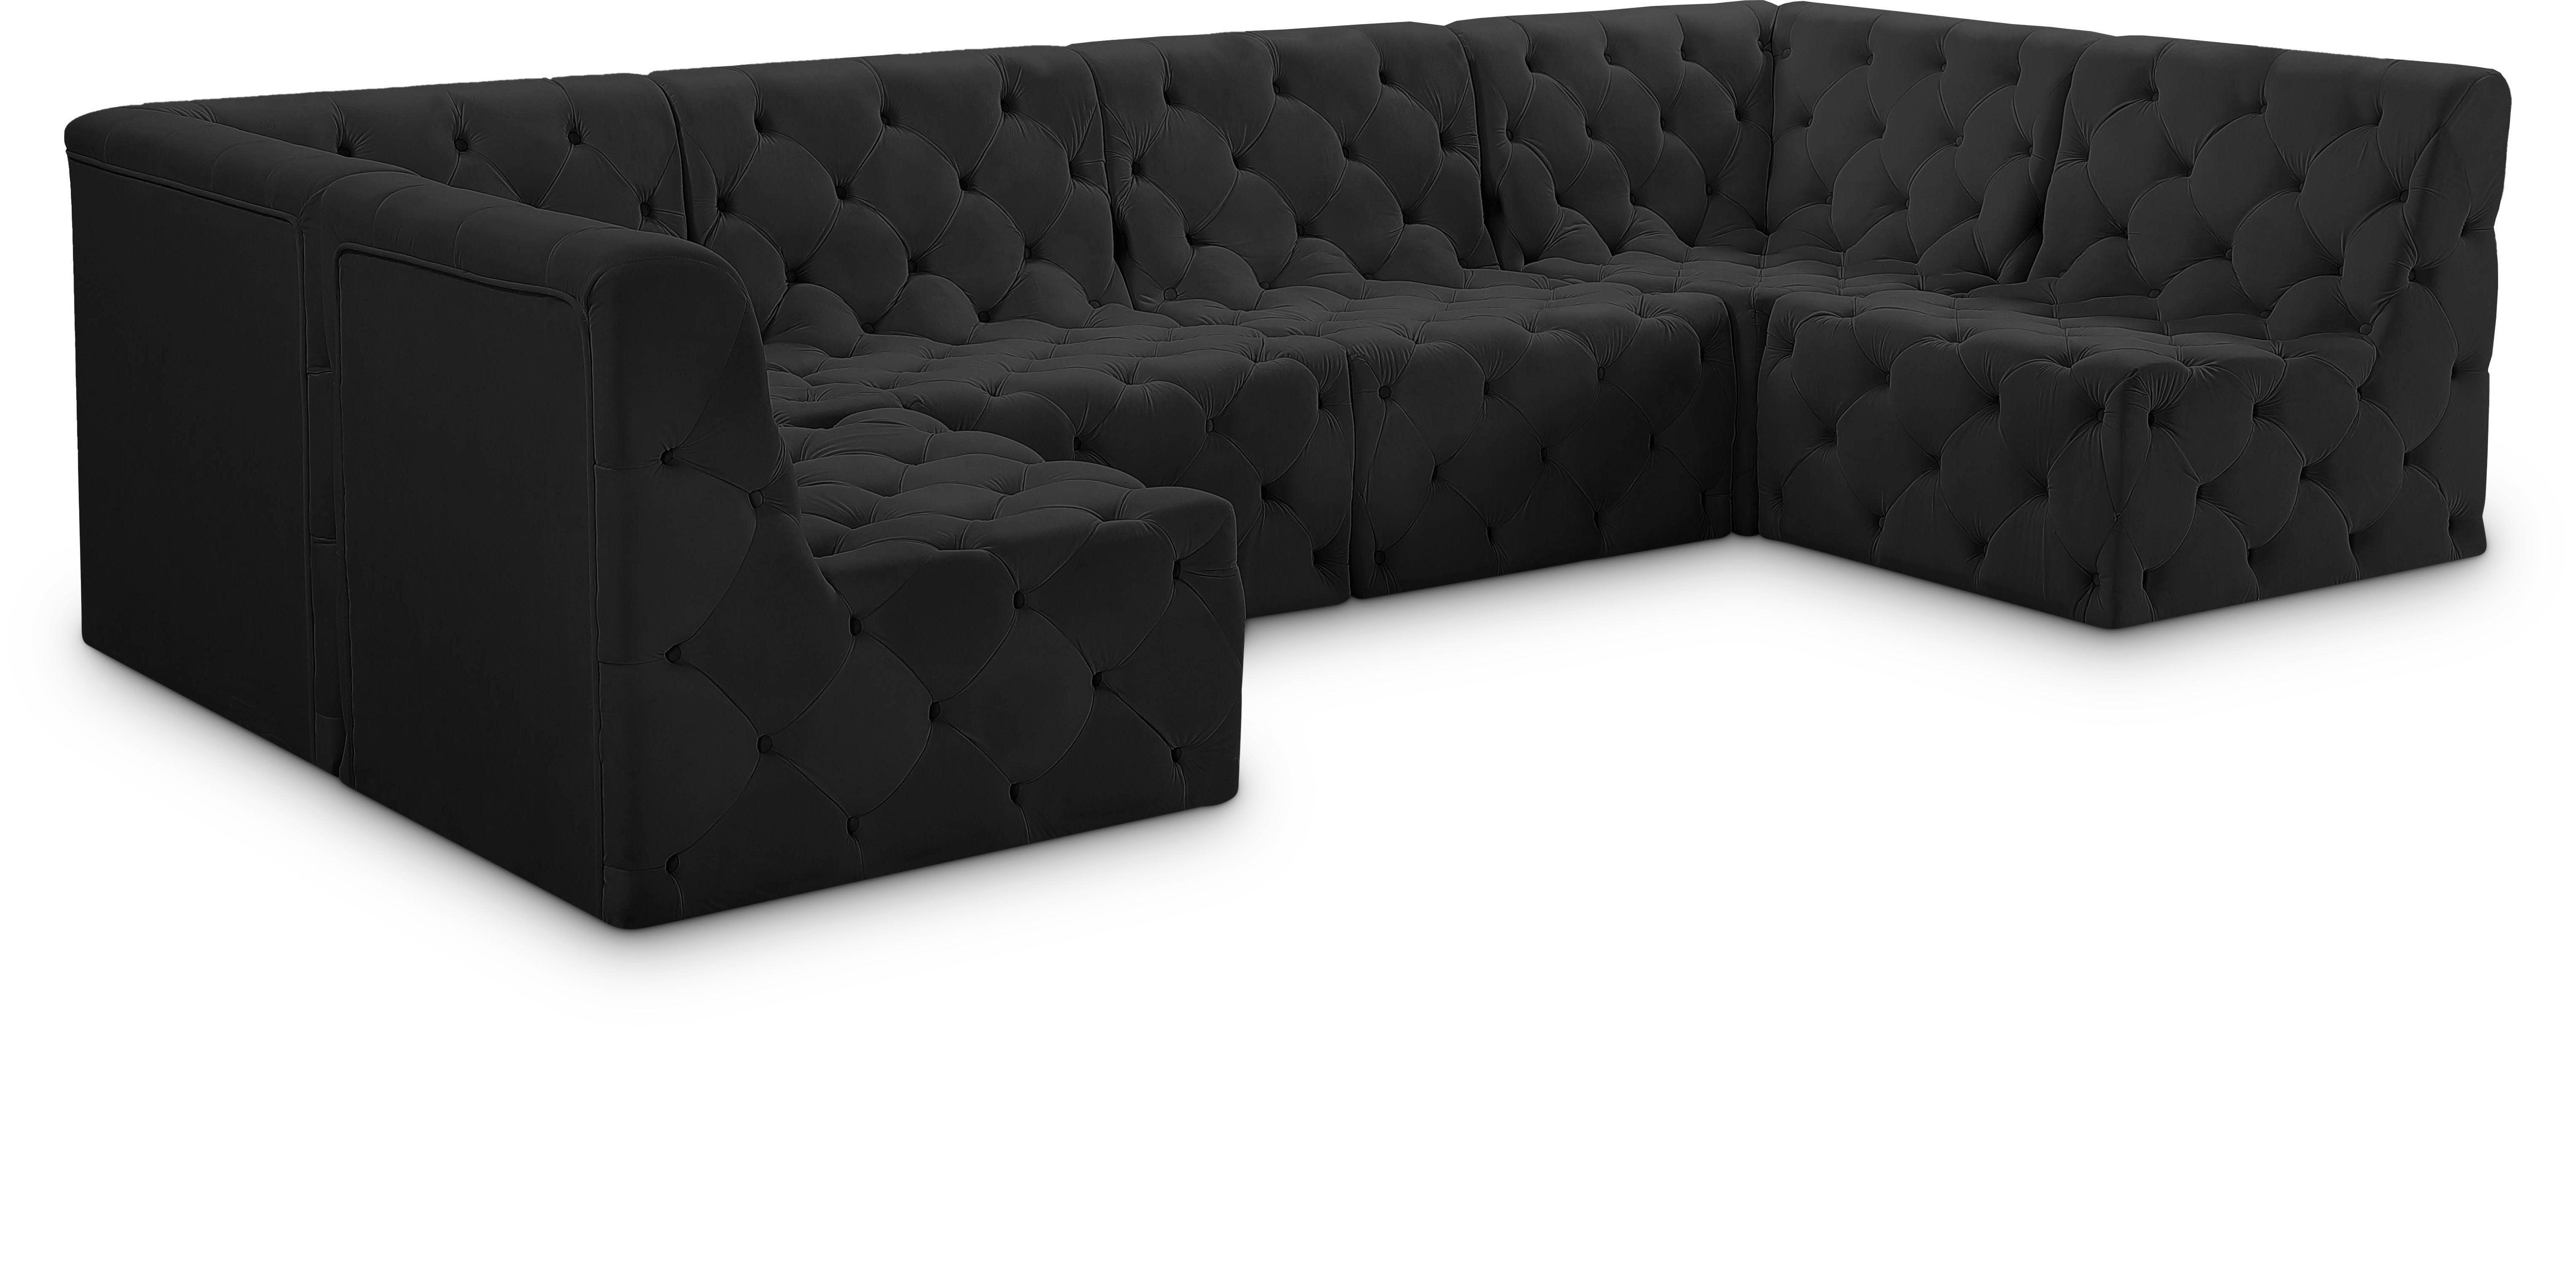 Meridian Furniture - Tuft - Modular Sectional 6 Piece - Black - Modern & Contemporary - 5th Avenue Furniture